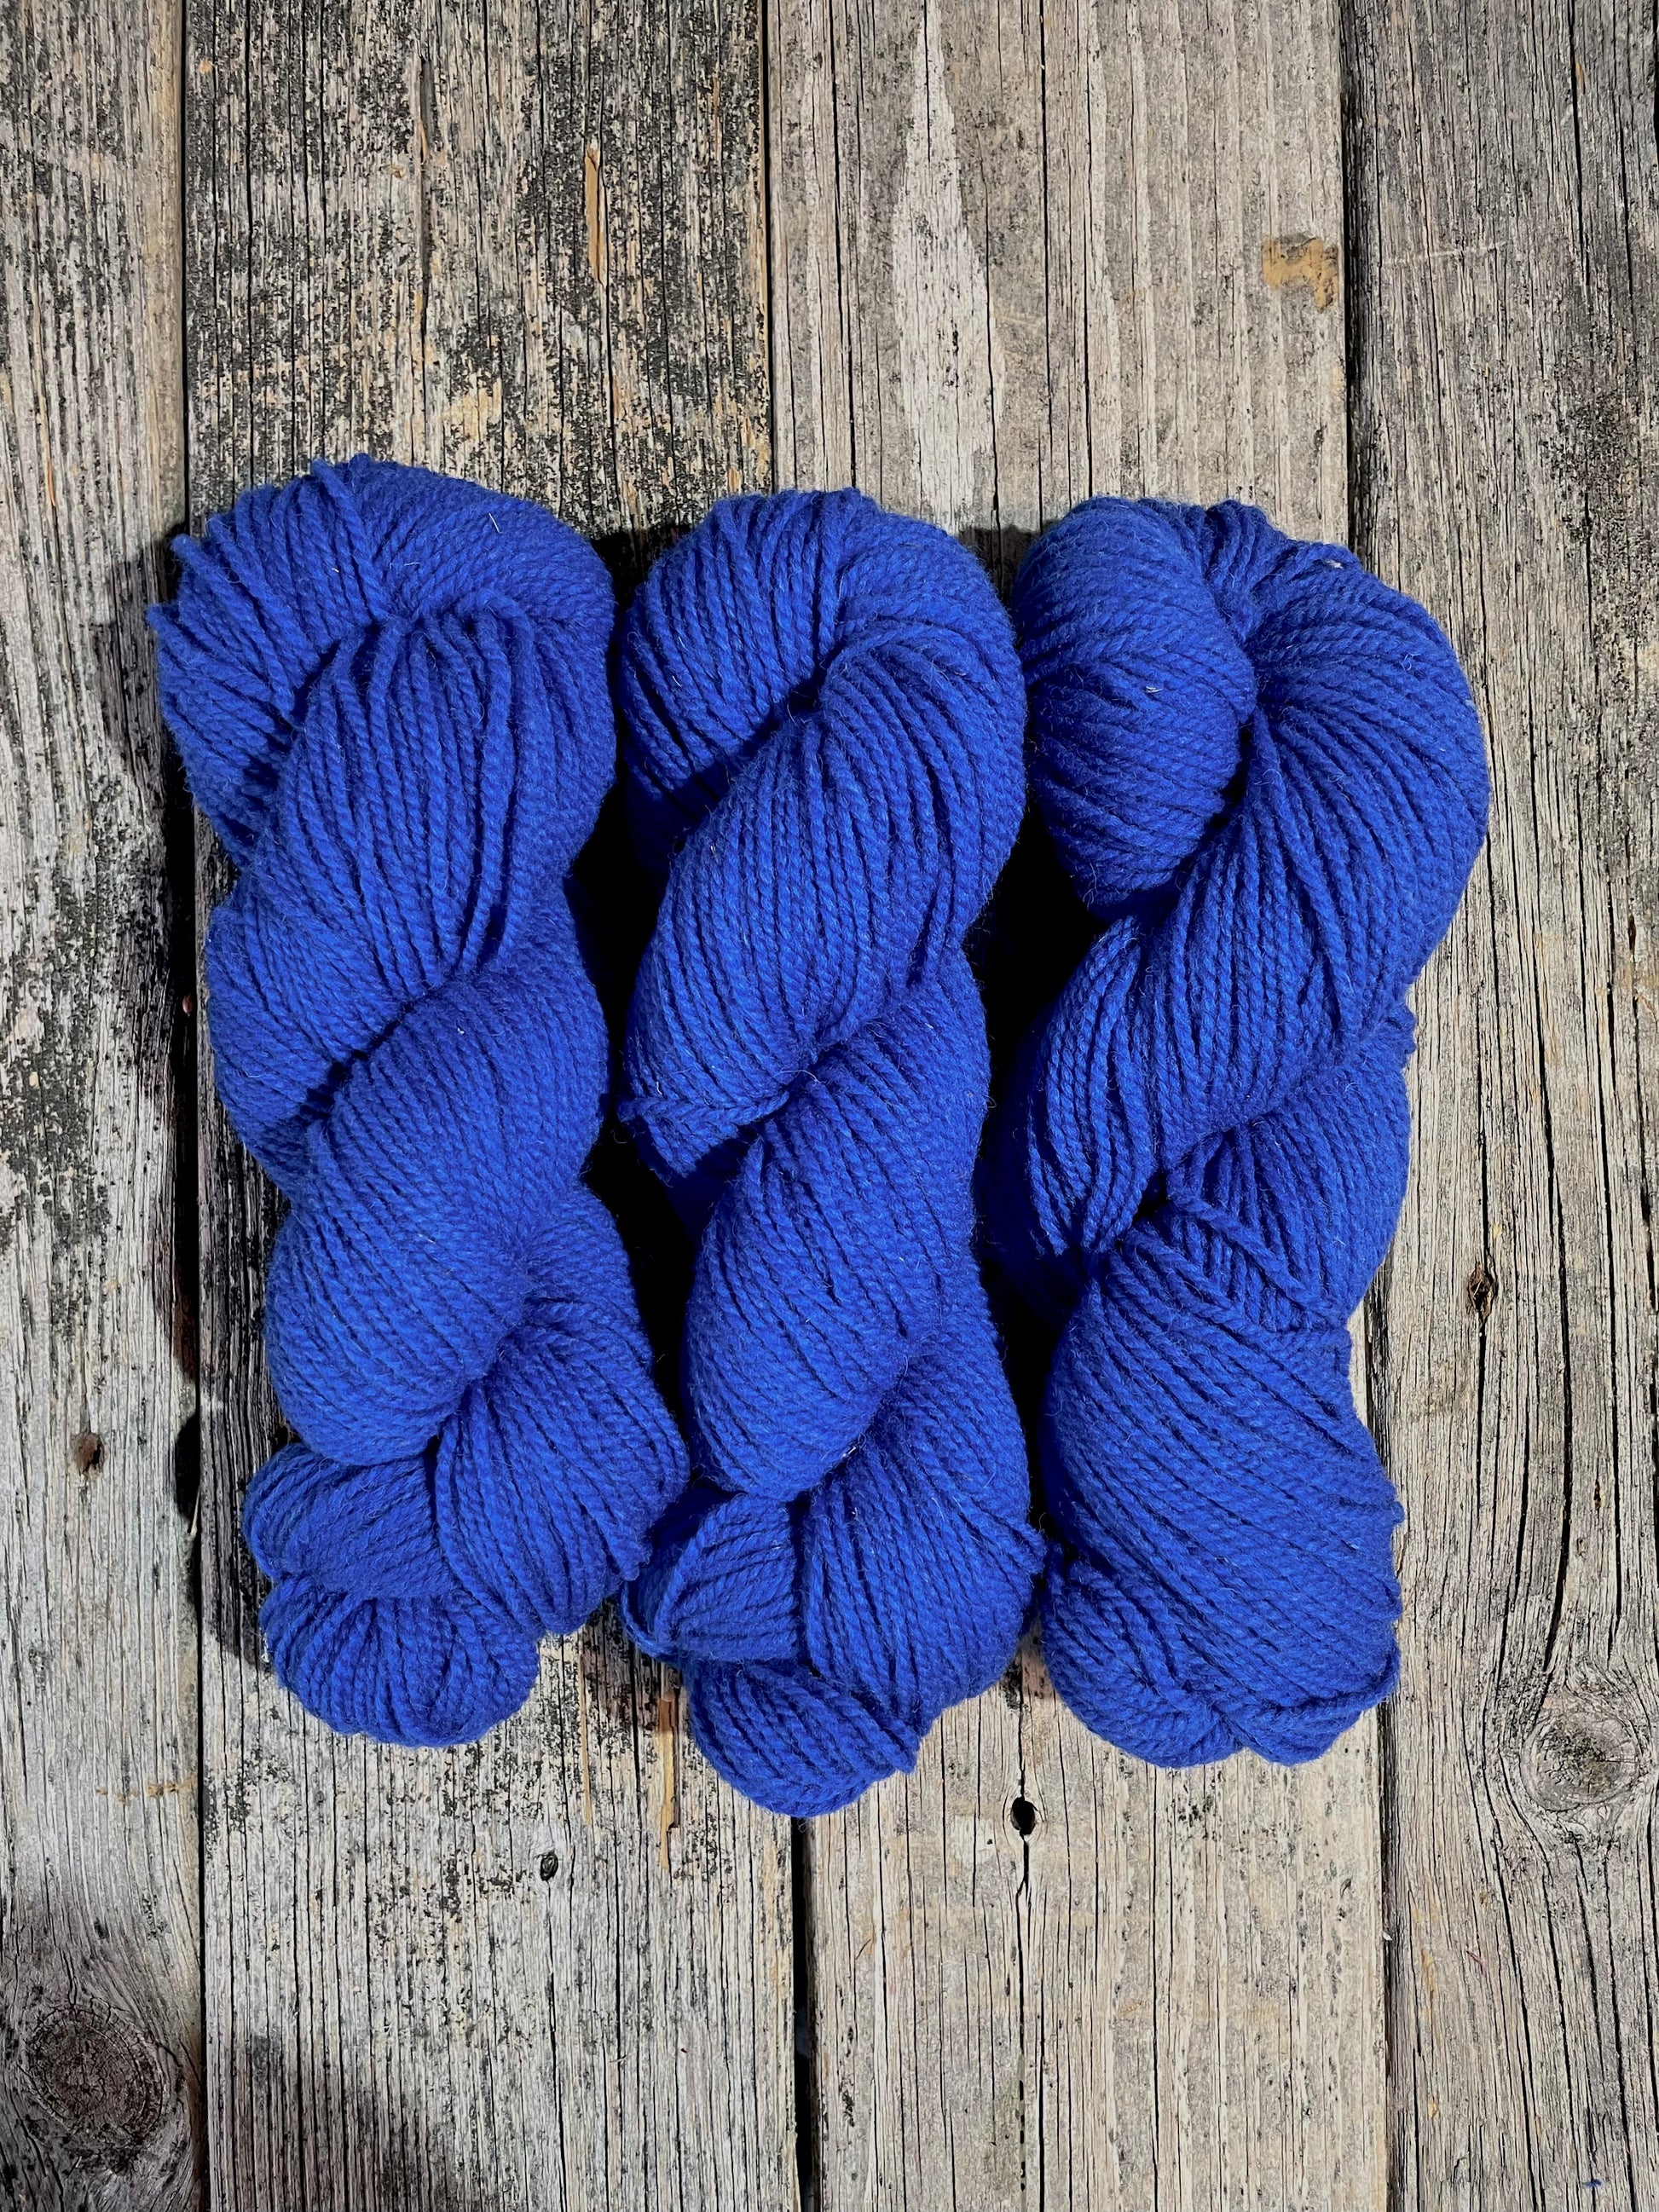 Briggs & Little Heritage: Royal Blue - Maine Yarn & Fiber Supply